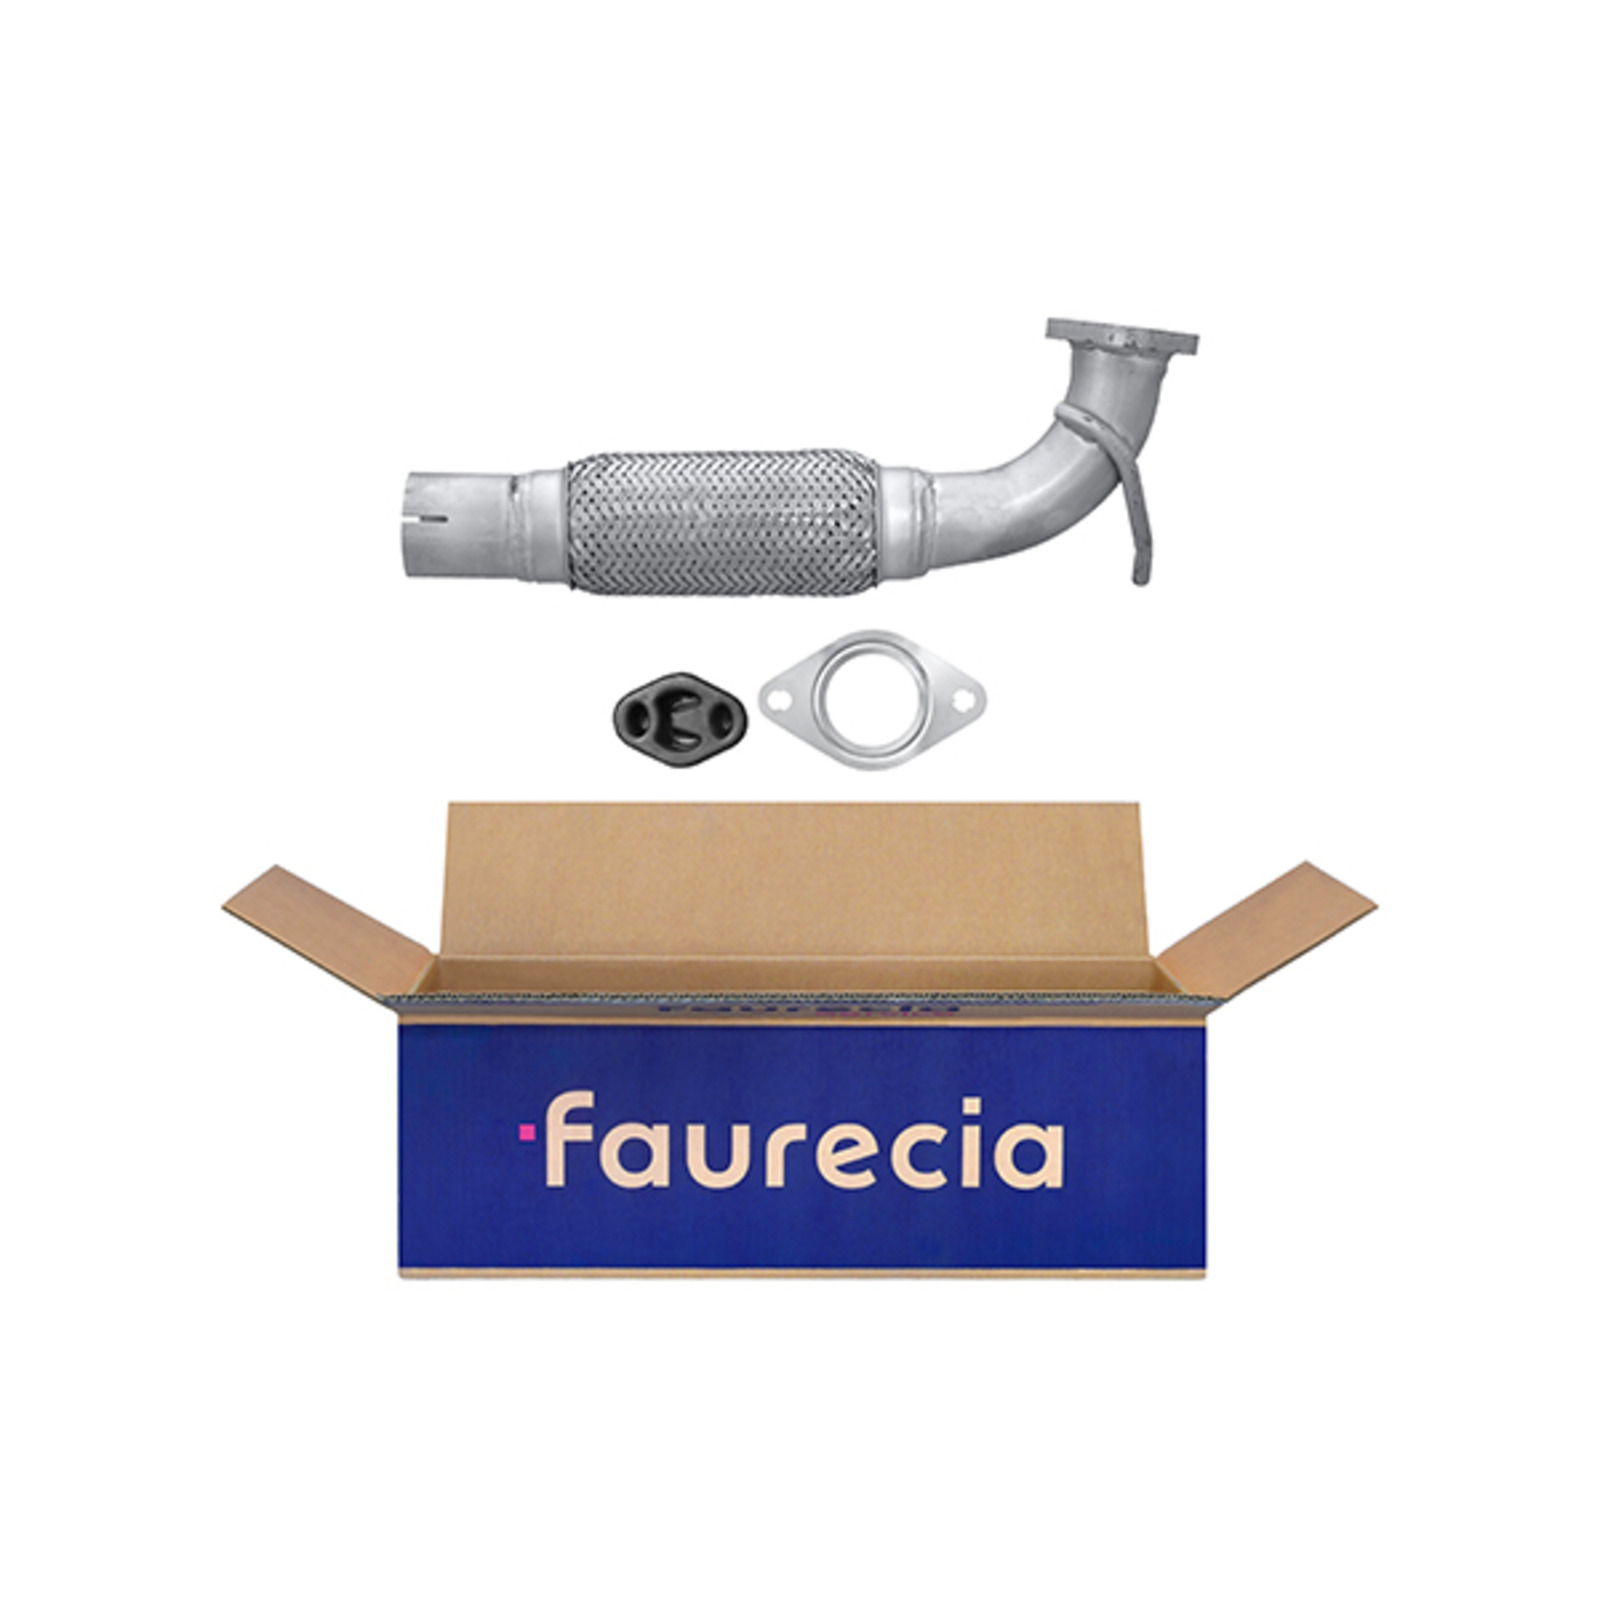 HELLA Reparaturrohr, Katalysator Easy2Fit – PARTNERED with Faurecia